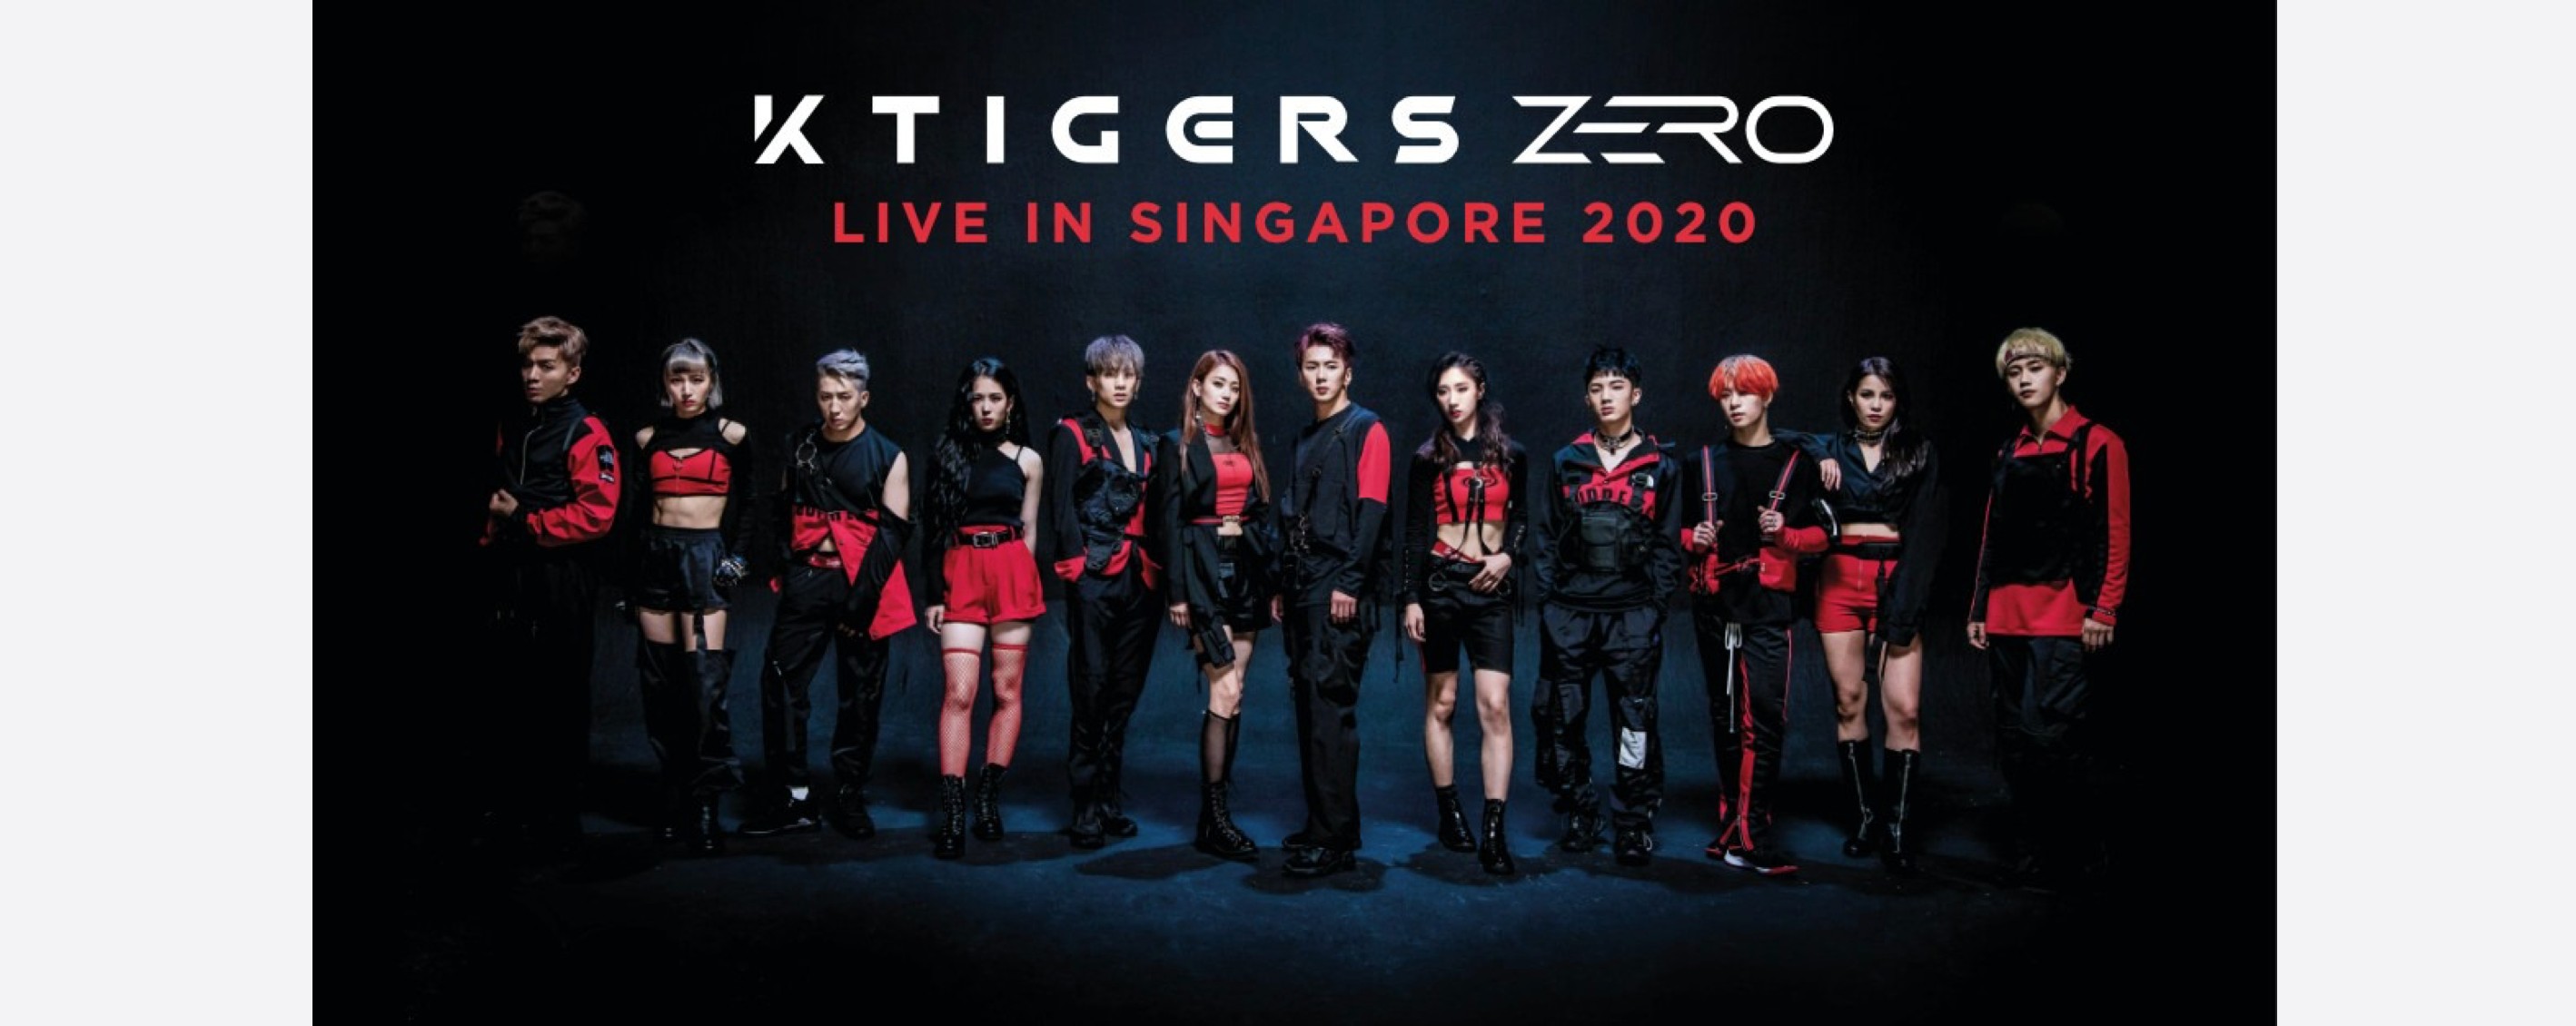 [POSTPONED] K-Tigers Zero - Live in Singapore 2020